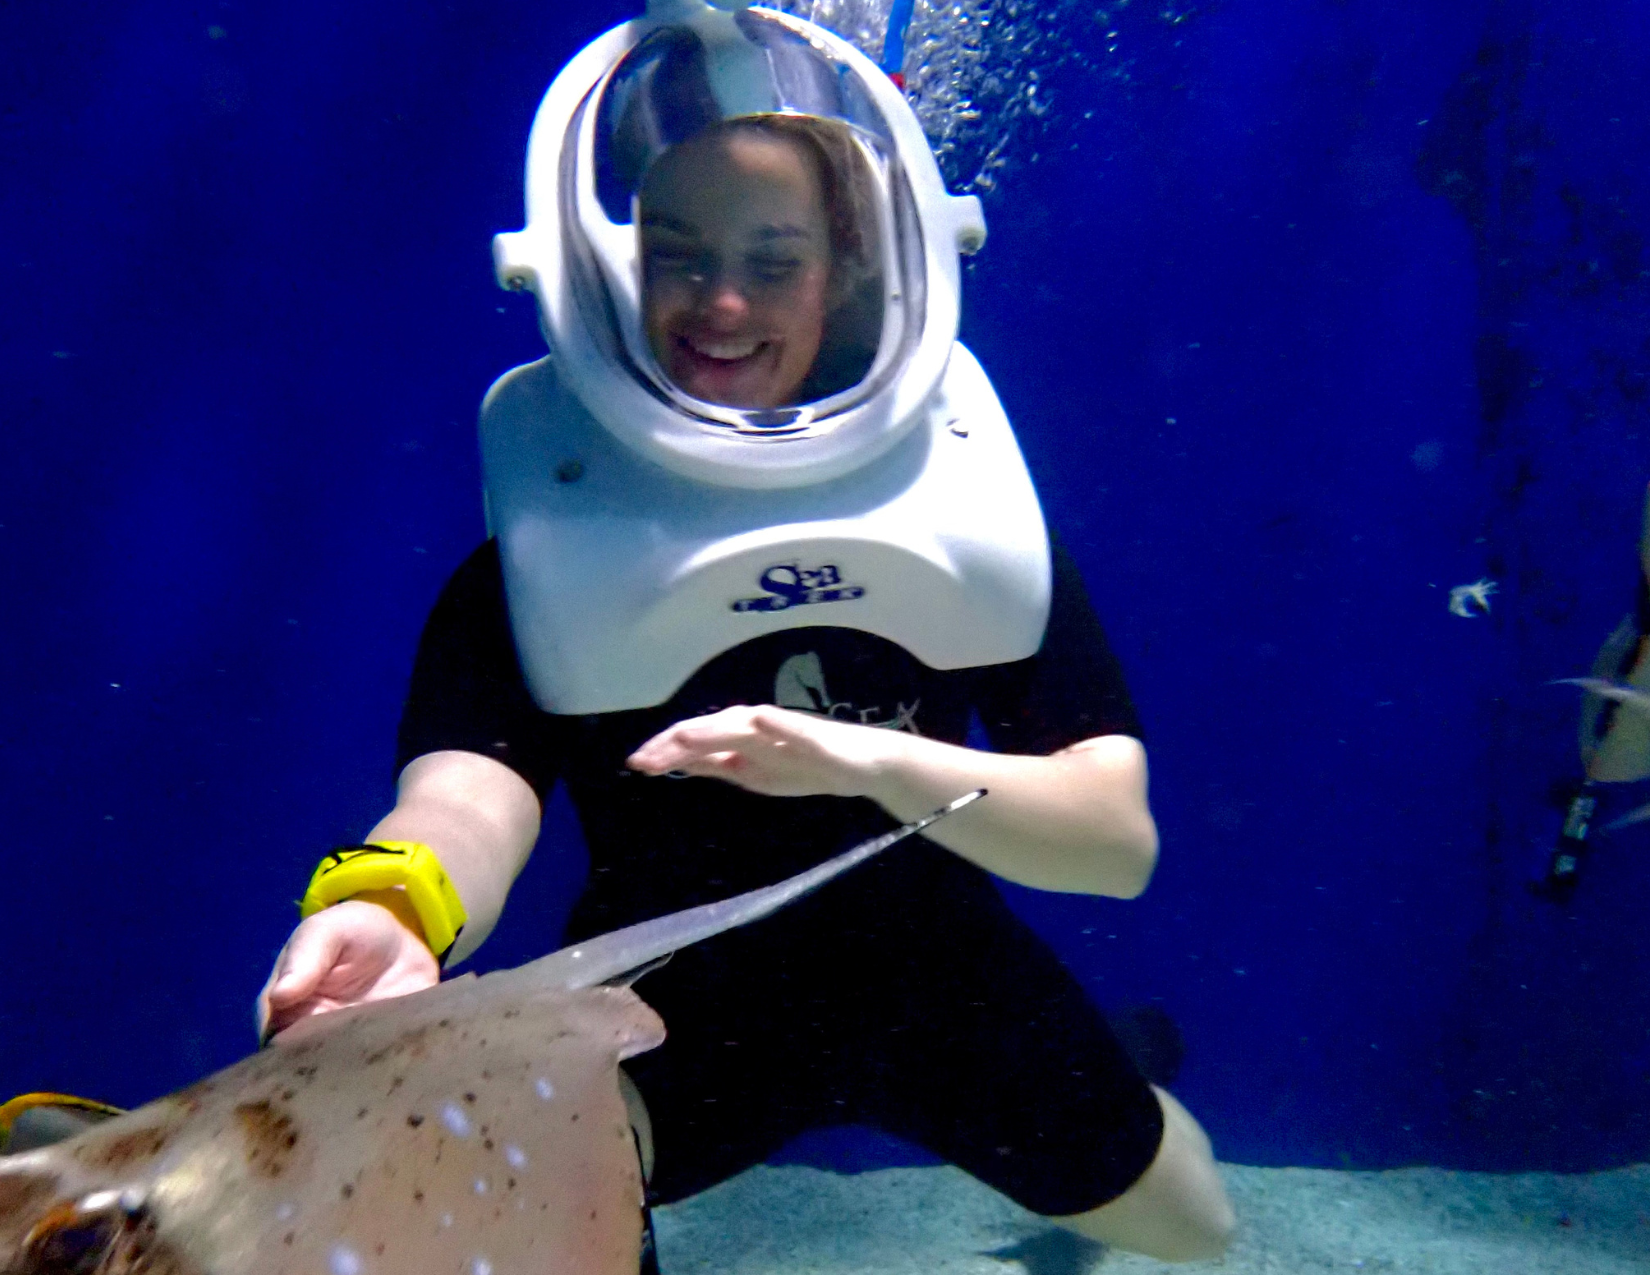 Lacy Cain Baranack doing the SeaTrek Underwater Helmet Diving tour at the Odysea Aquarium in Scottsdale, Arizona